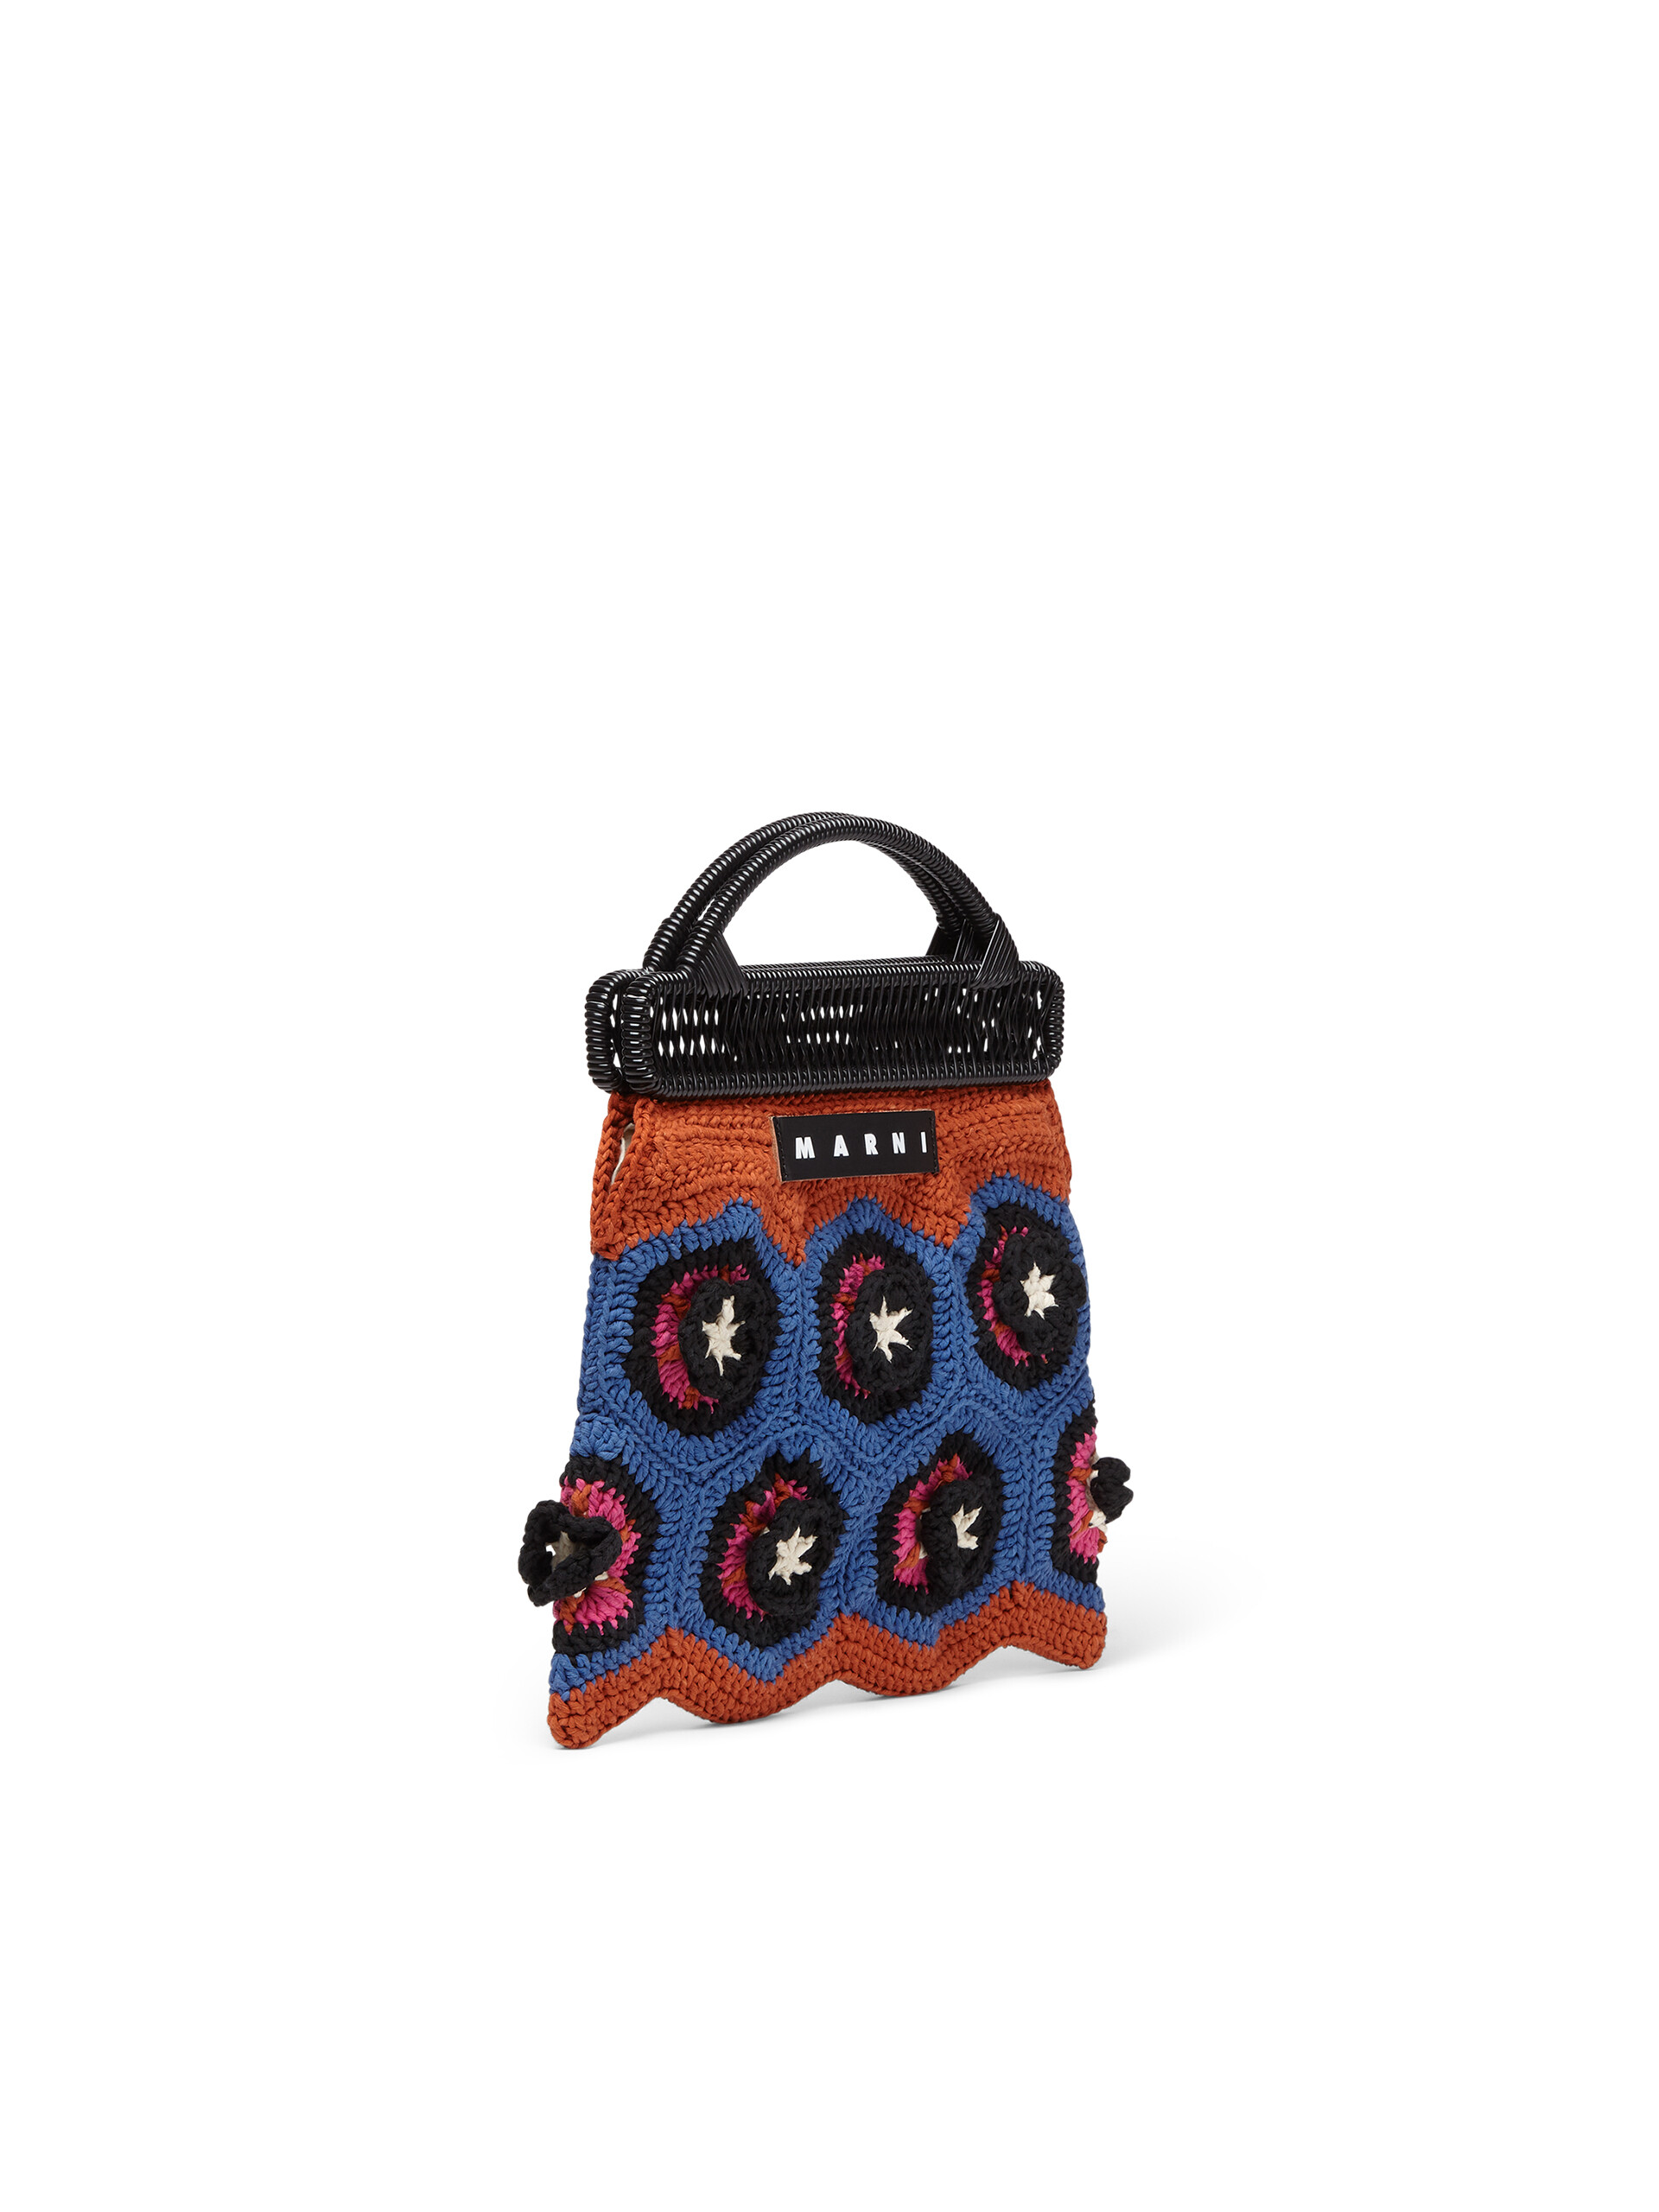 MARNI MARKET CROCHET bag in orange and blue crochet cotton - Furniture - Image 2